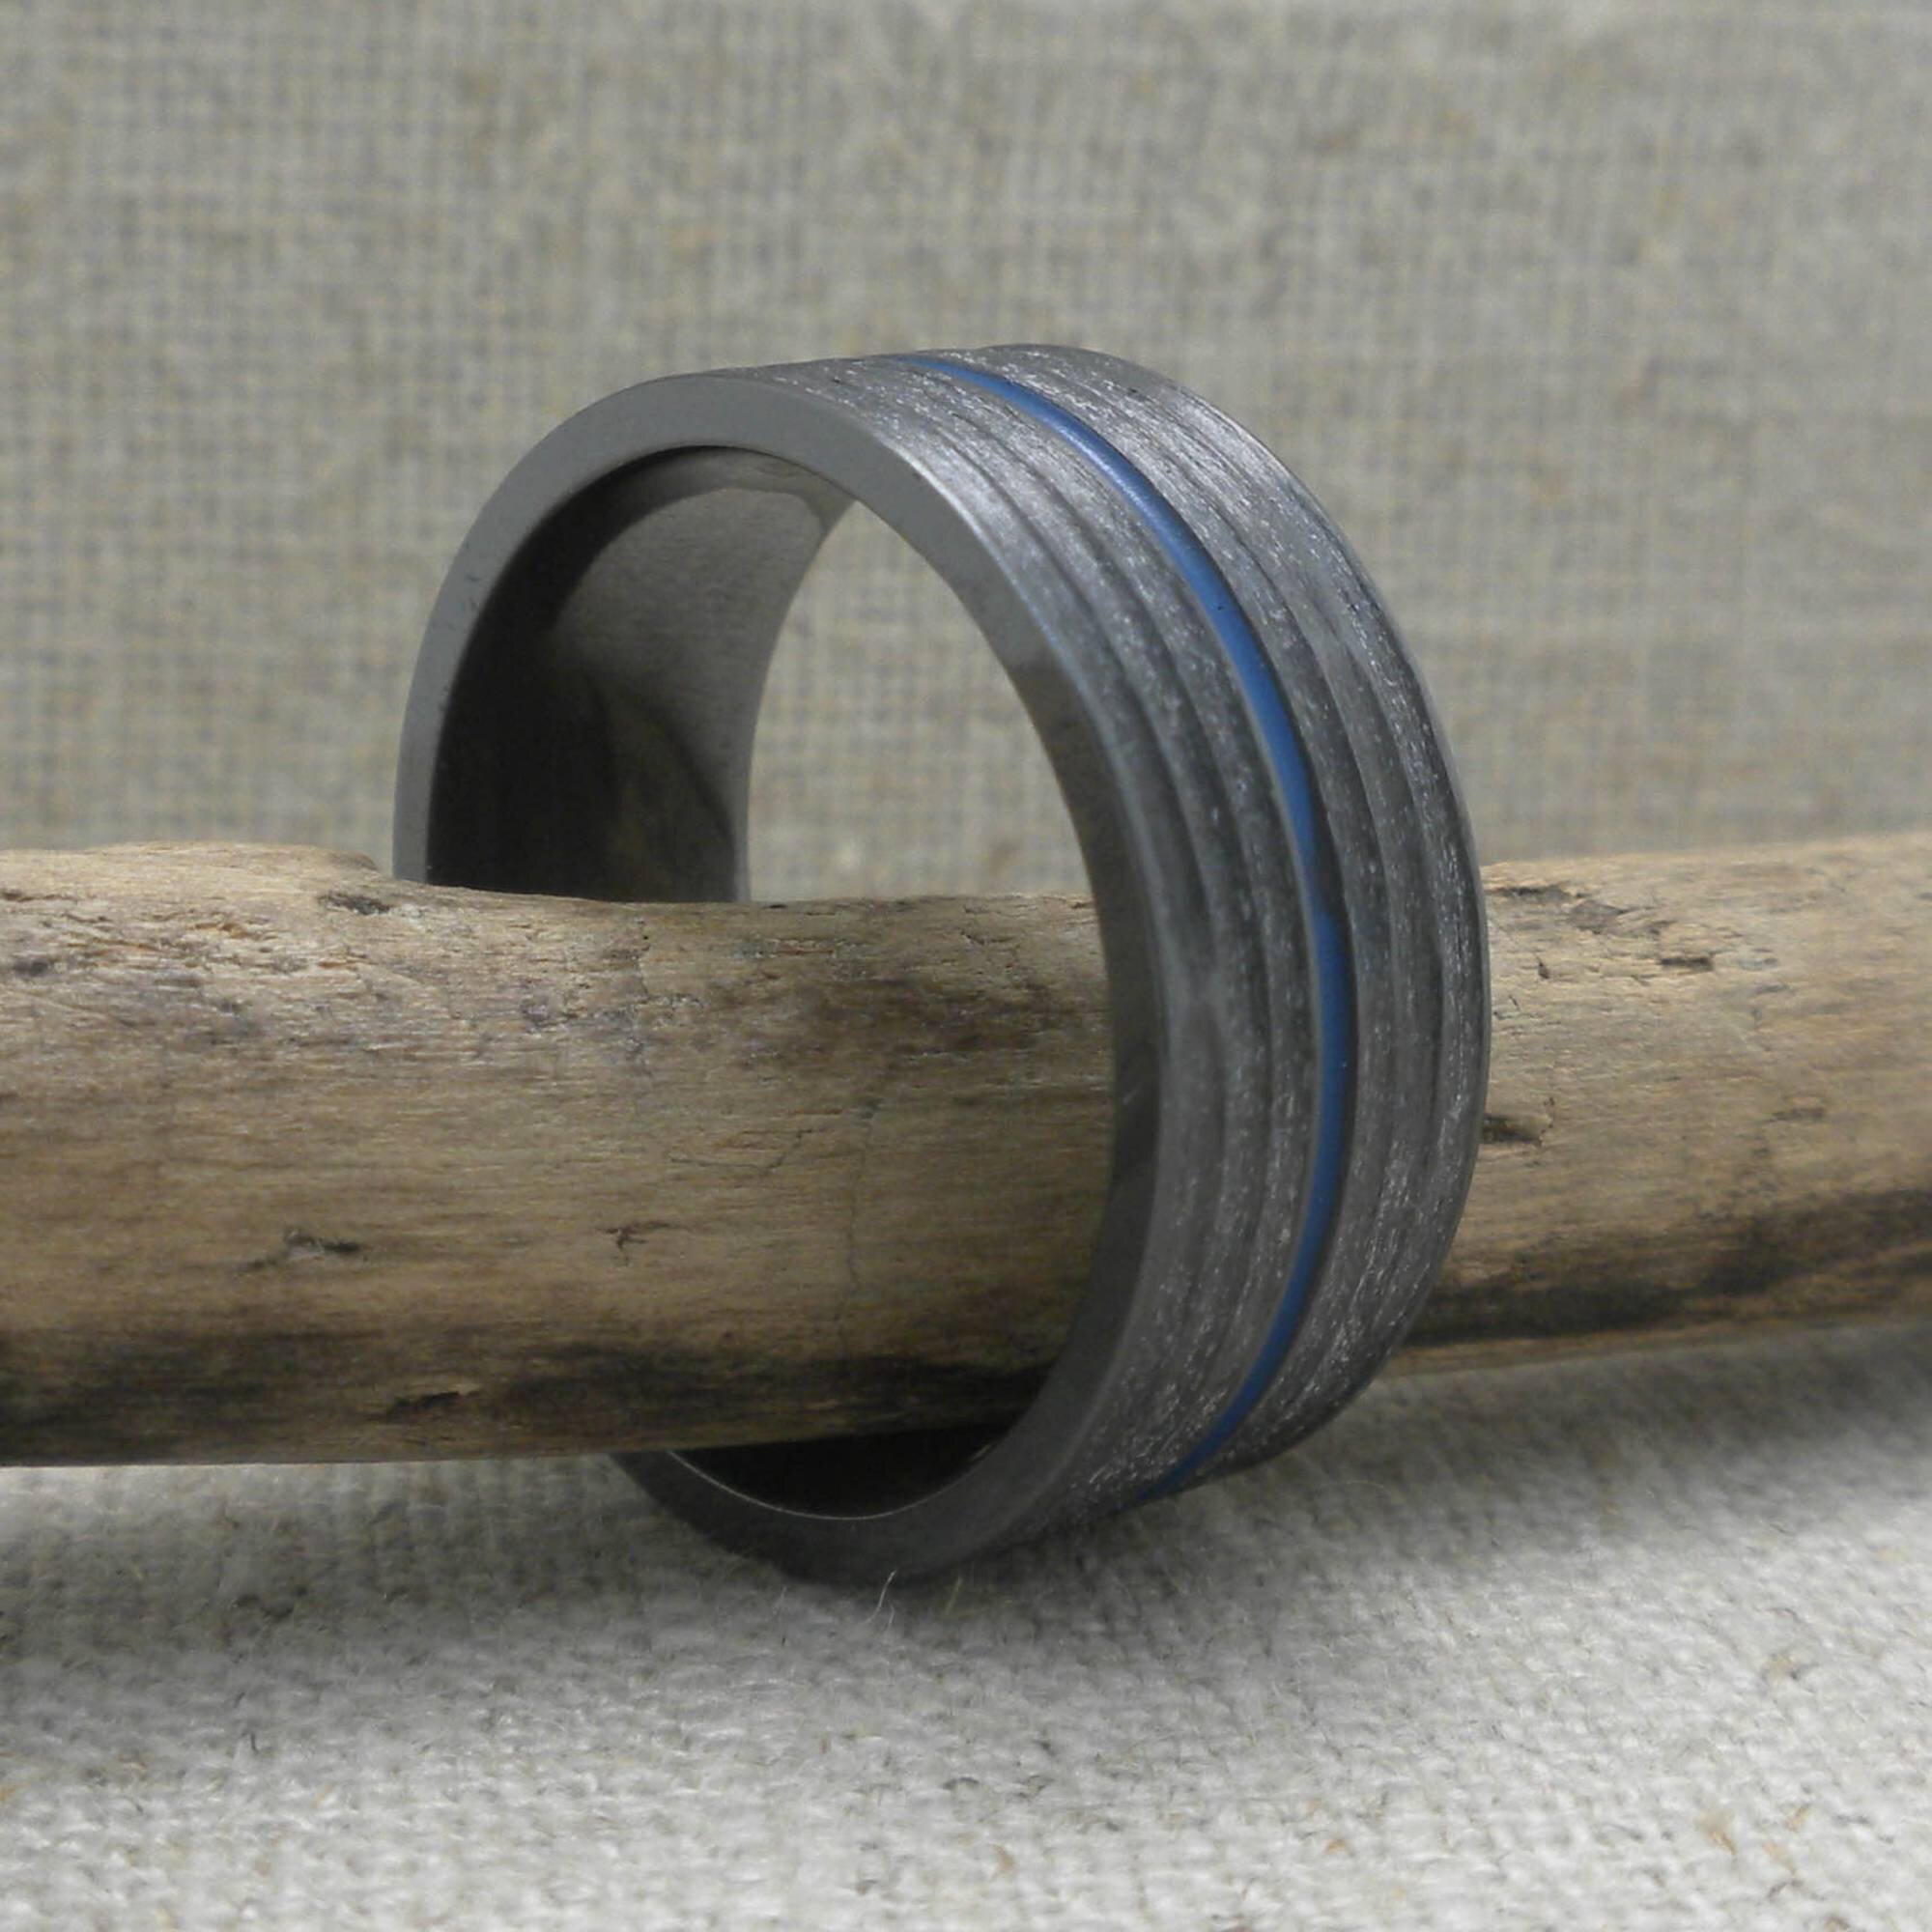 Black Zirconium Wedding Ring with Thin Blue Line and Bark Finish